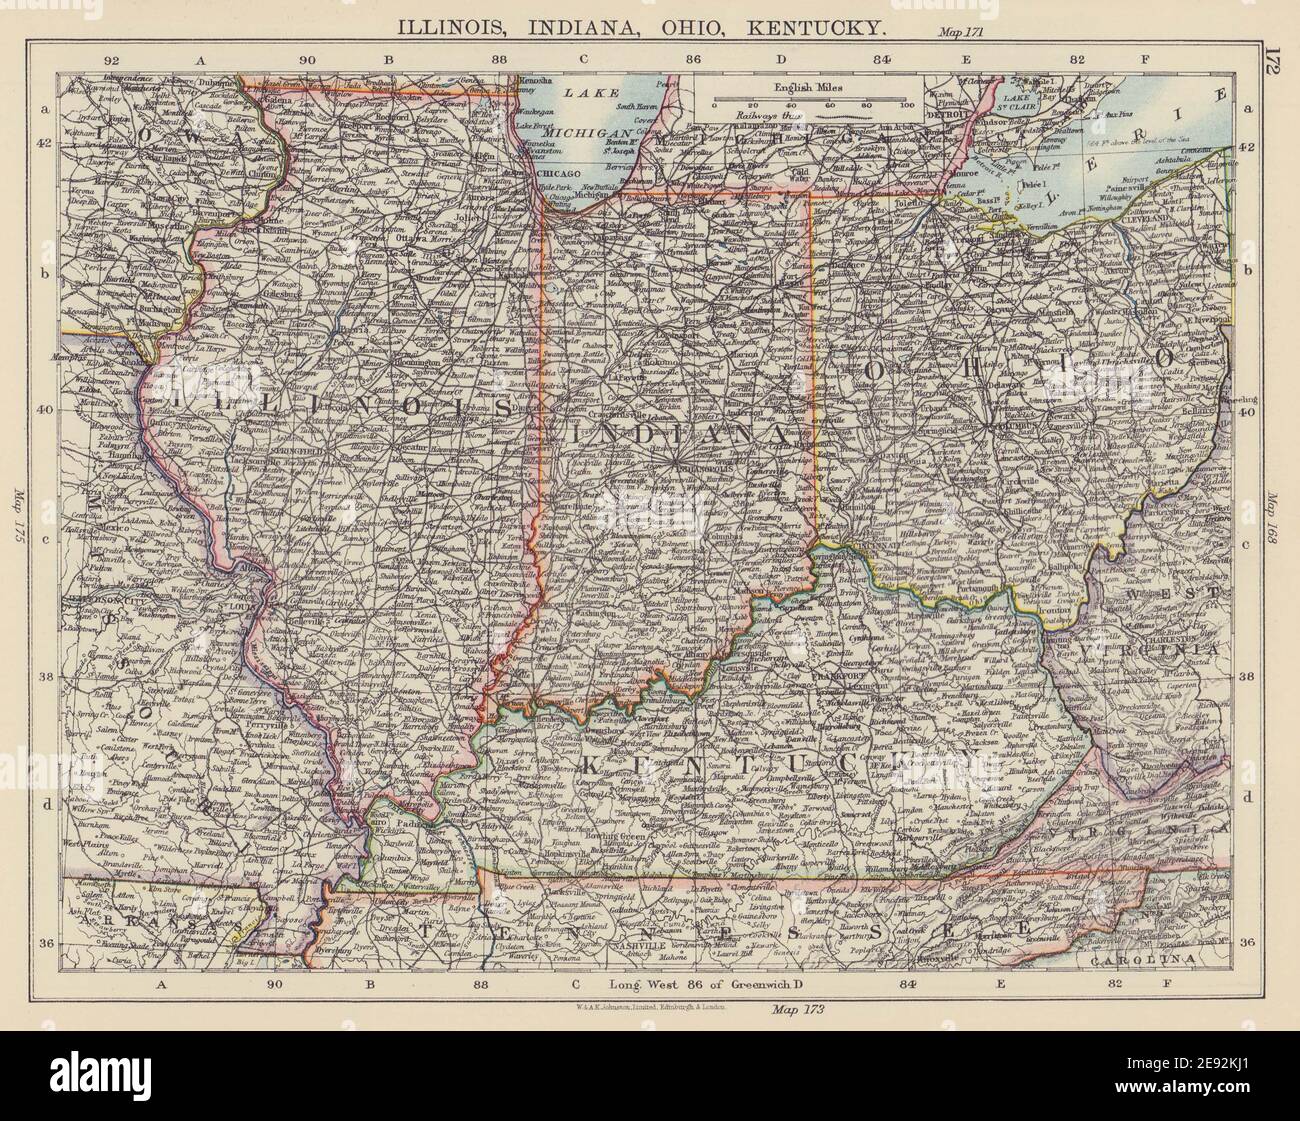 USA MIDWEST. Illinois Indiana Ohio Kentucky. Railroads. JOHNSTON 1901 old map Stock Photo